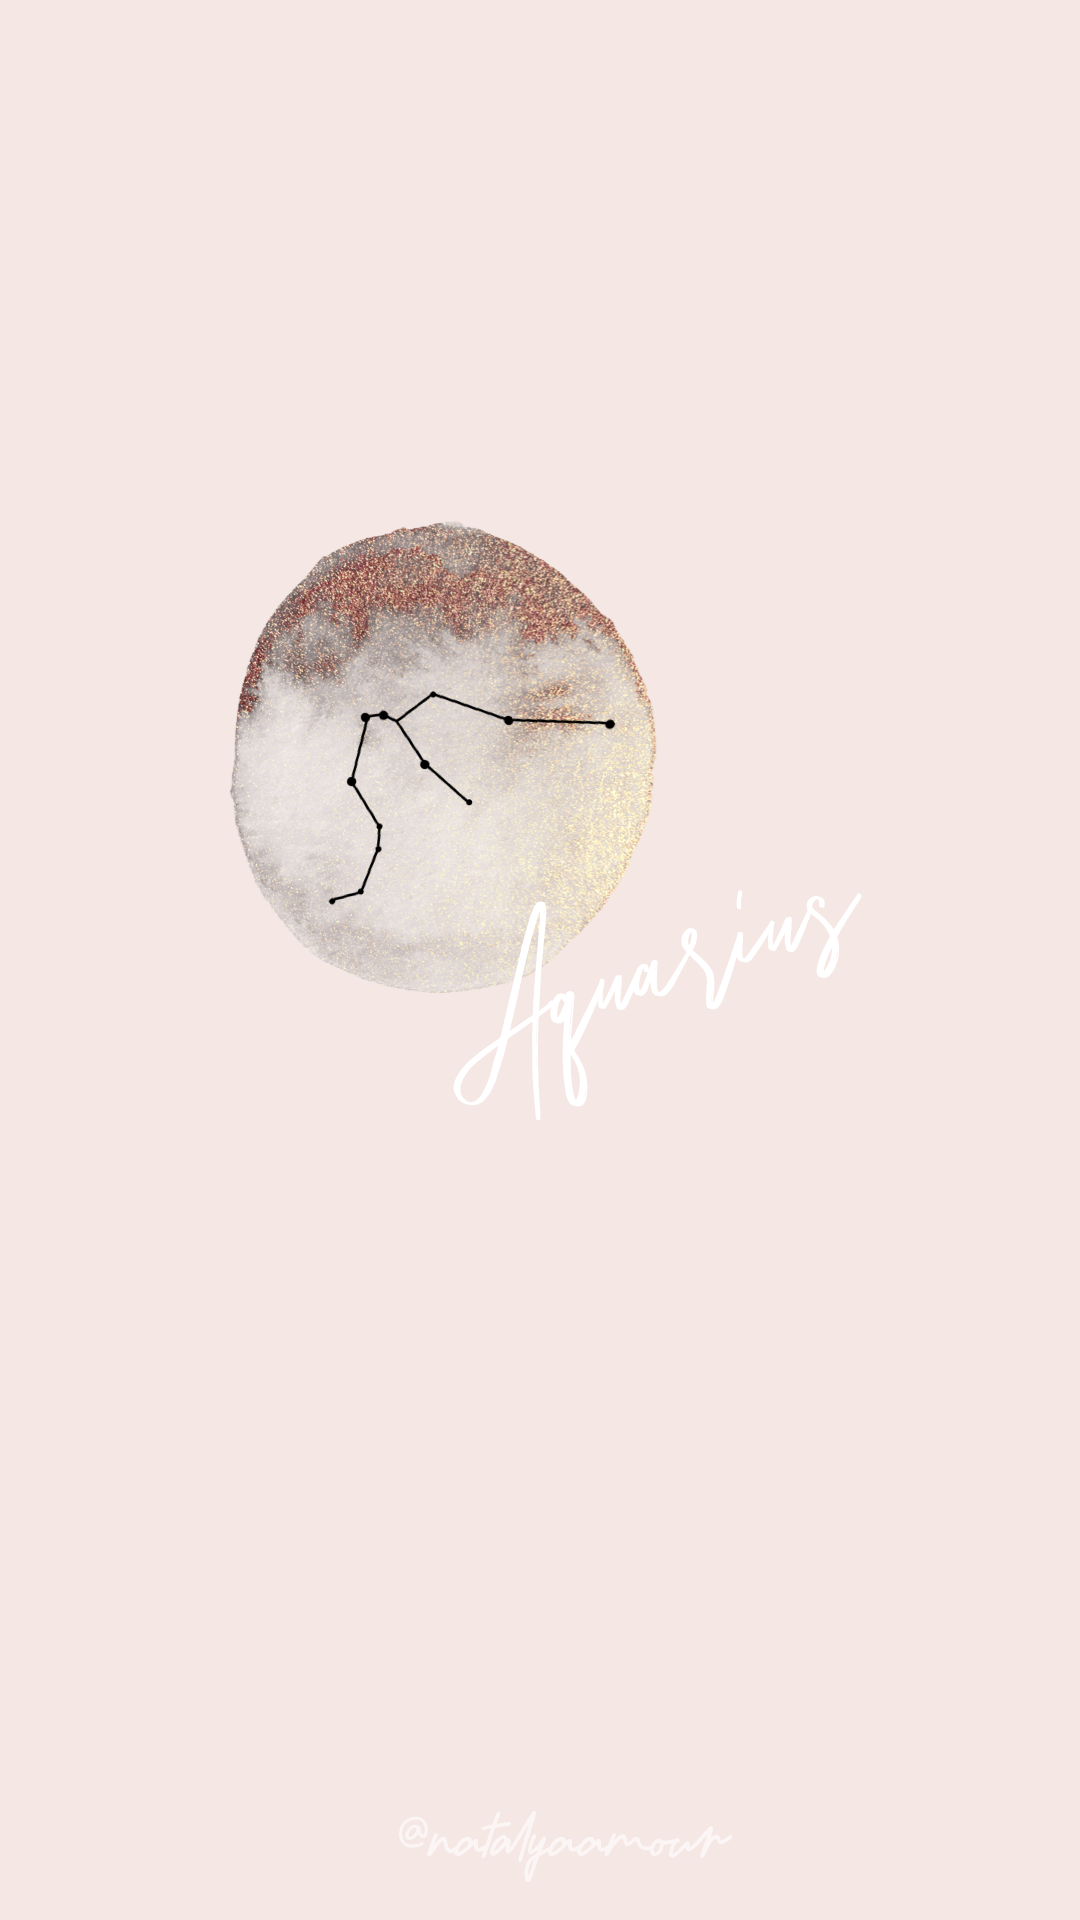 Free Aries Phone Wallpaper. Aquarius aesthetic, Instagram wallpaper, Aquarius art